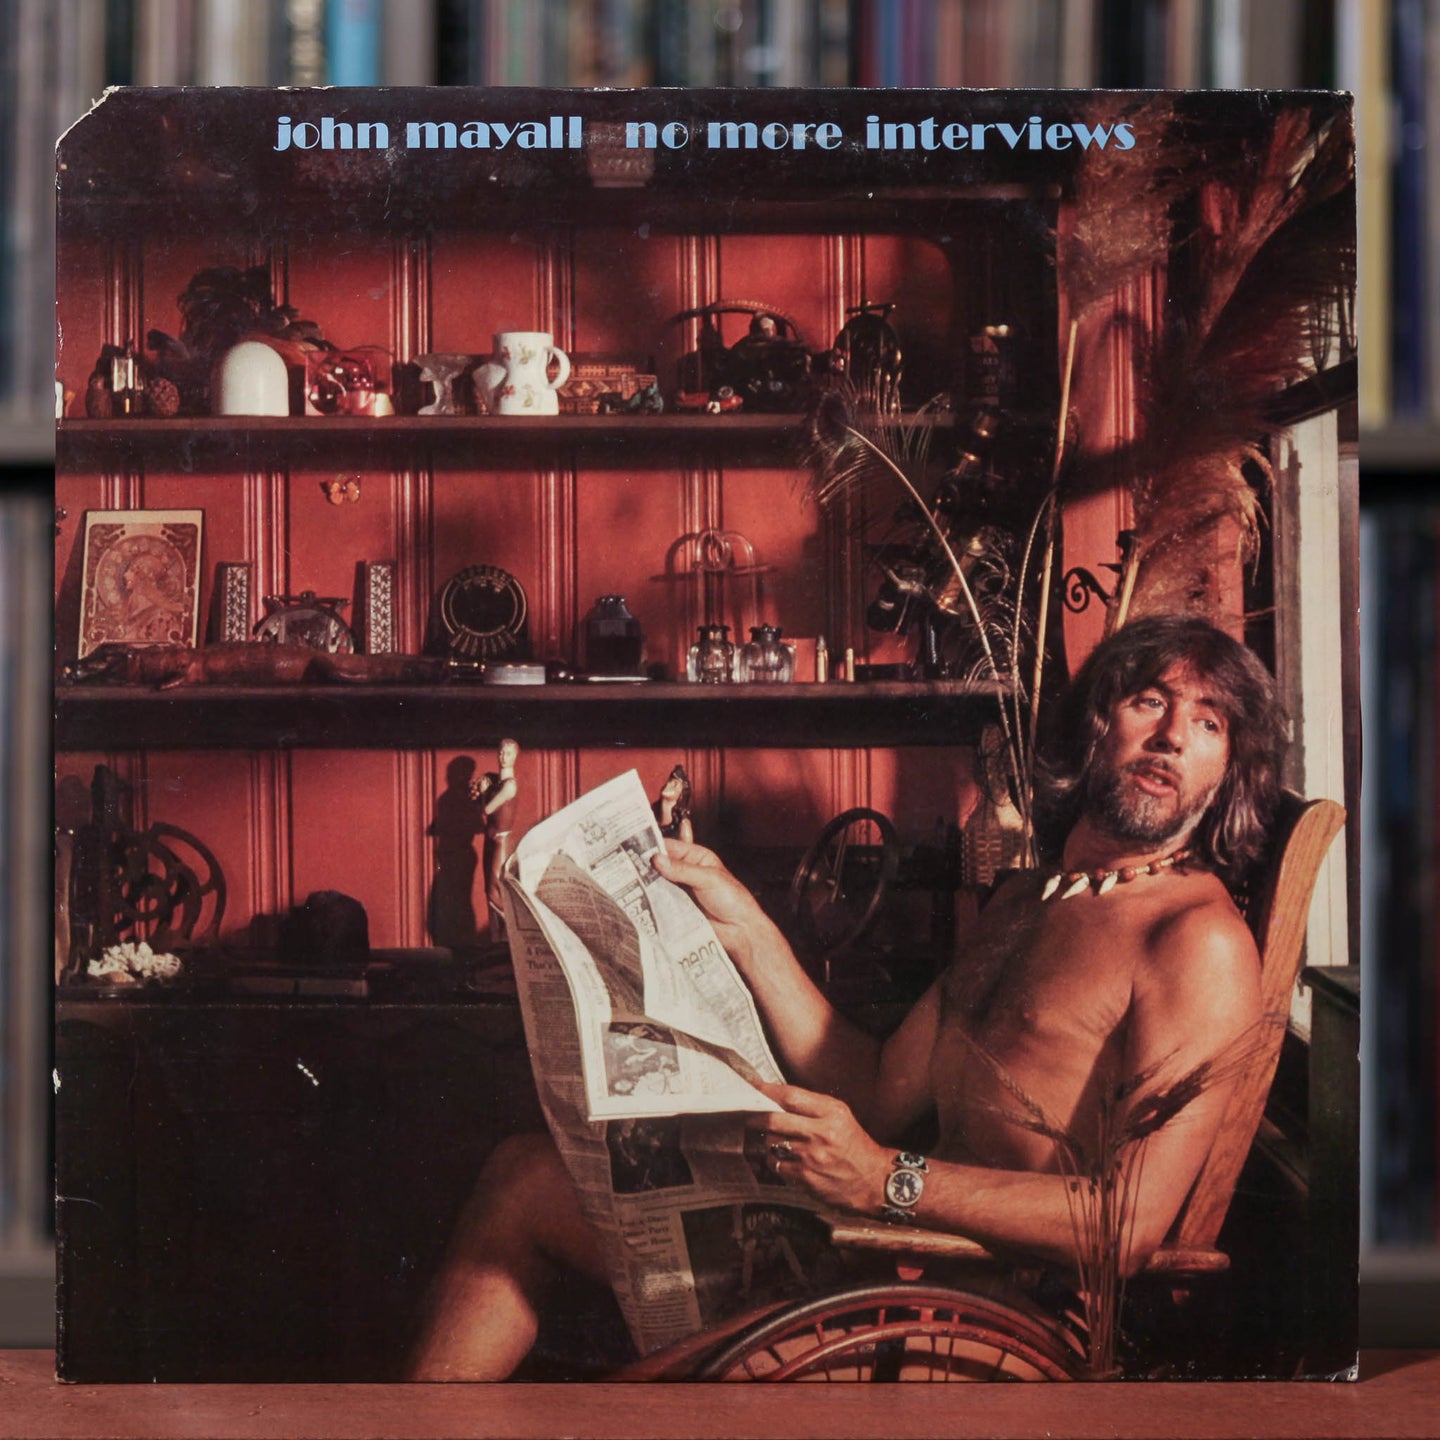 John Mayall - No More Interviews - 1979 DJM, VG/VG